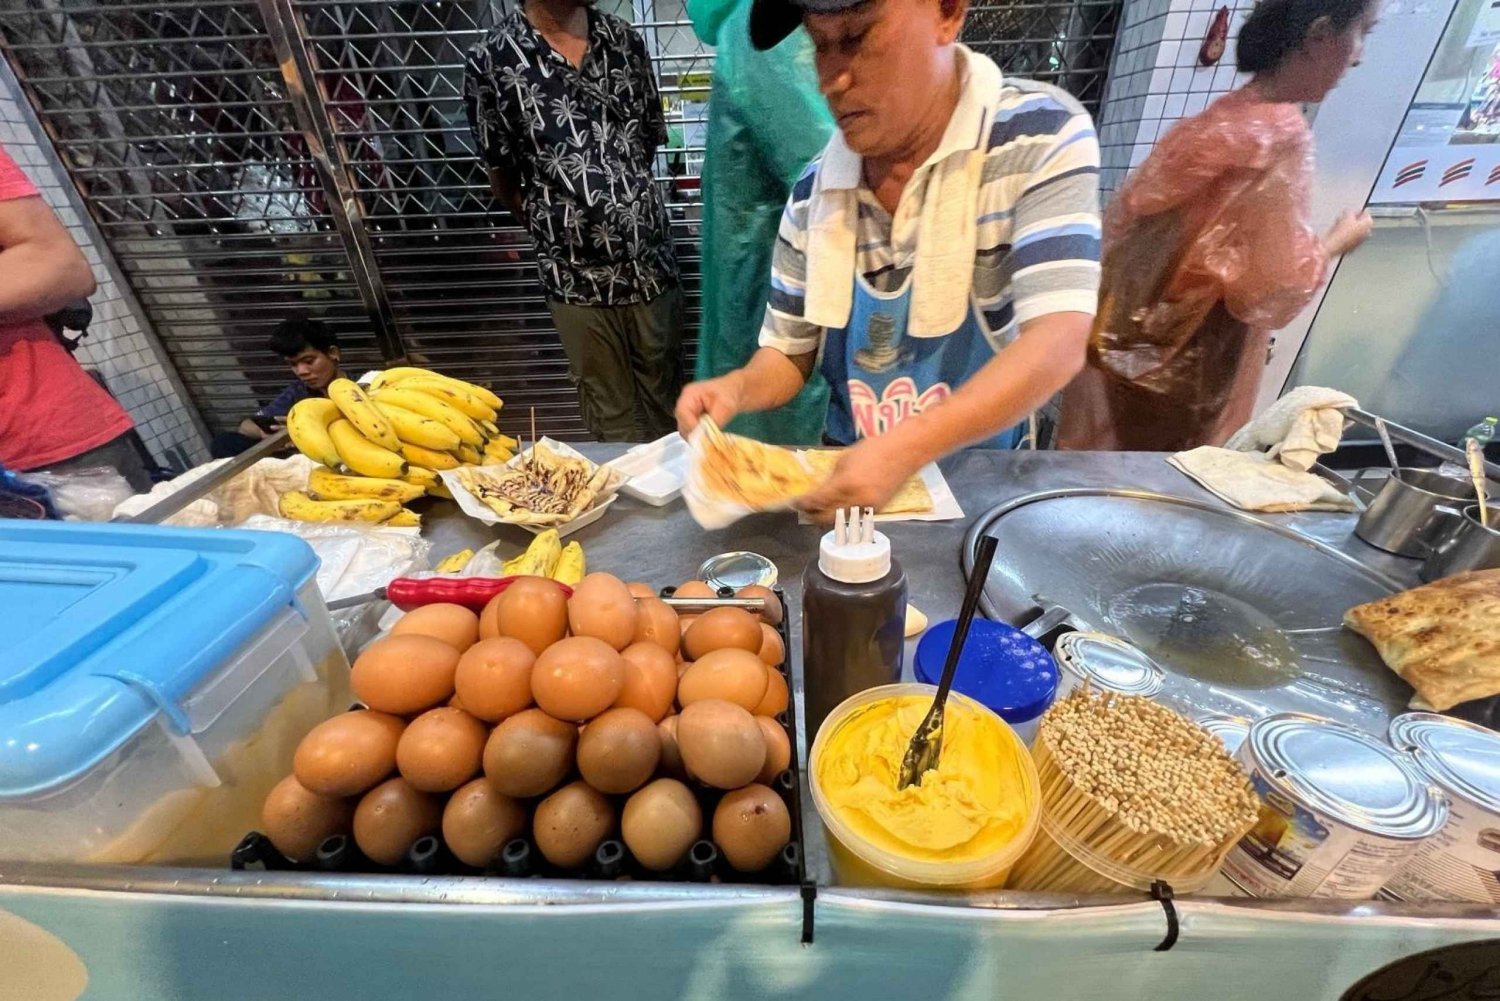 Bangkok : Den fantastiska matrundturen i Bangkok